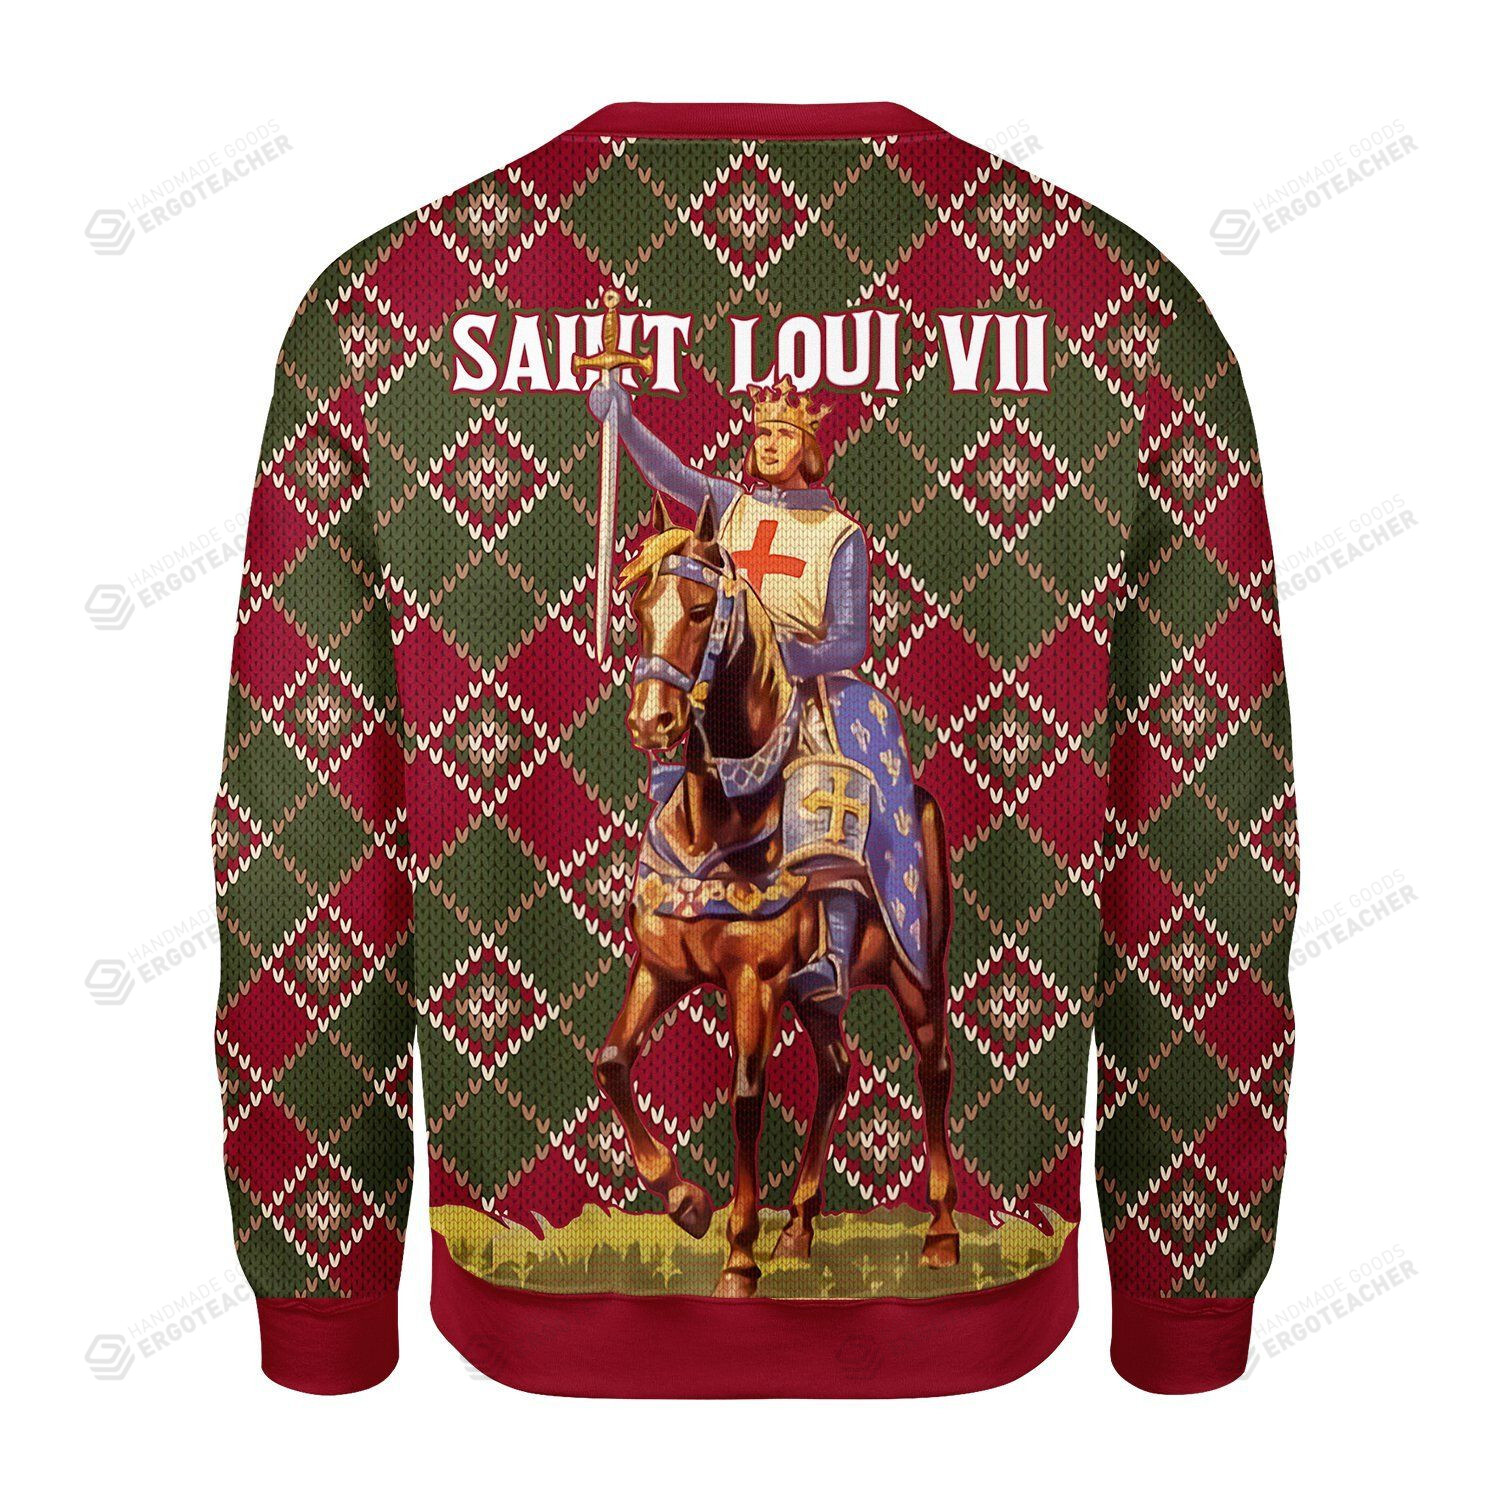 Merry Christmas Gearhomies Saint Loui Vii Ugly Christmas Sweater, All Over Print Sweatshirt